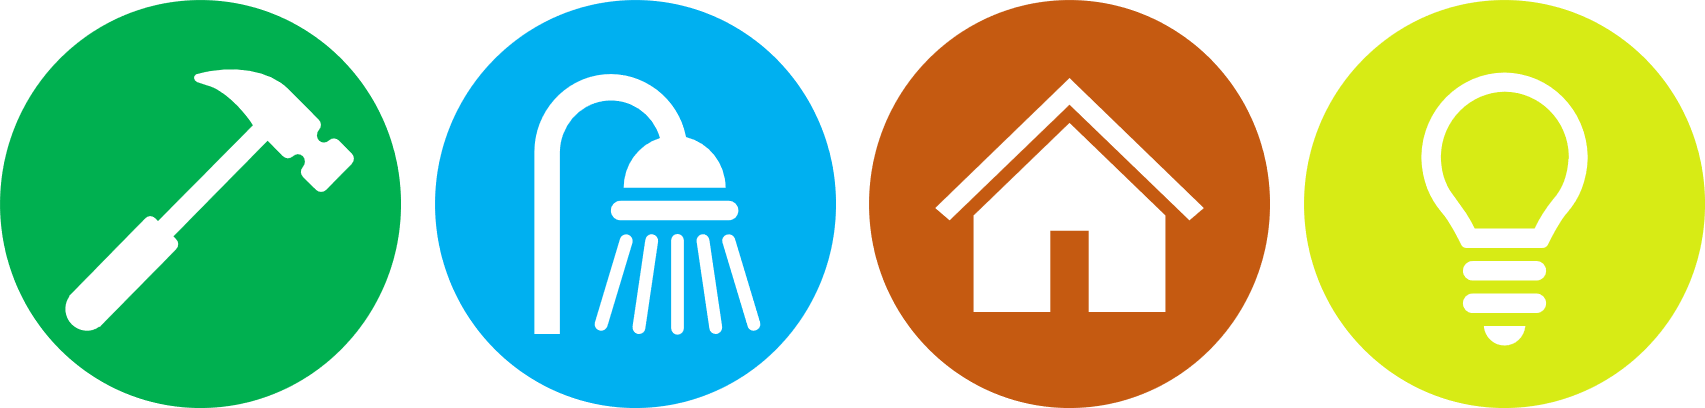 Handyman Services Icons